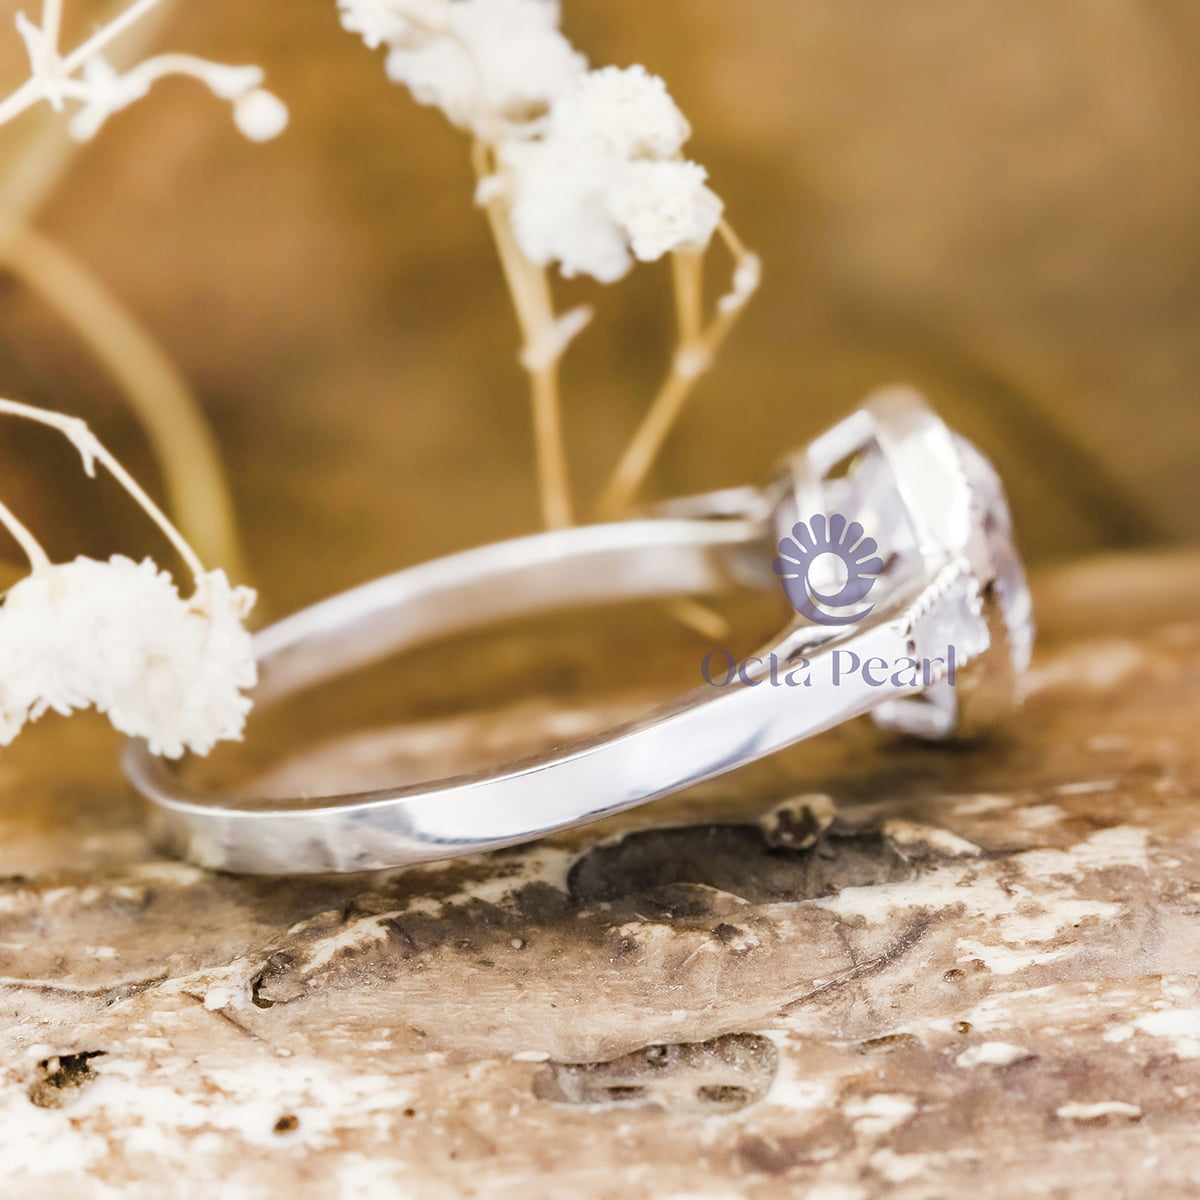 Bezel Set 3 Stone Art Deco Engagement Ring